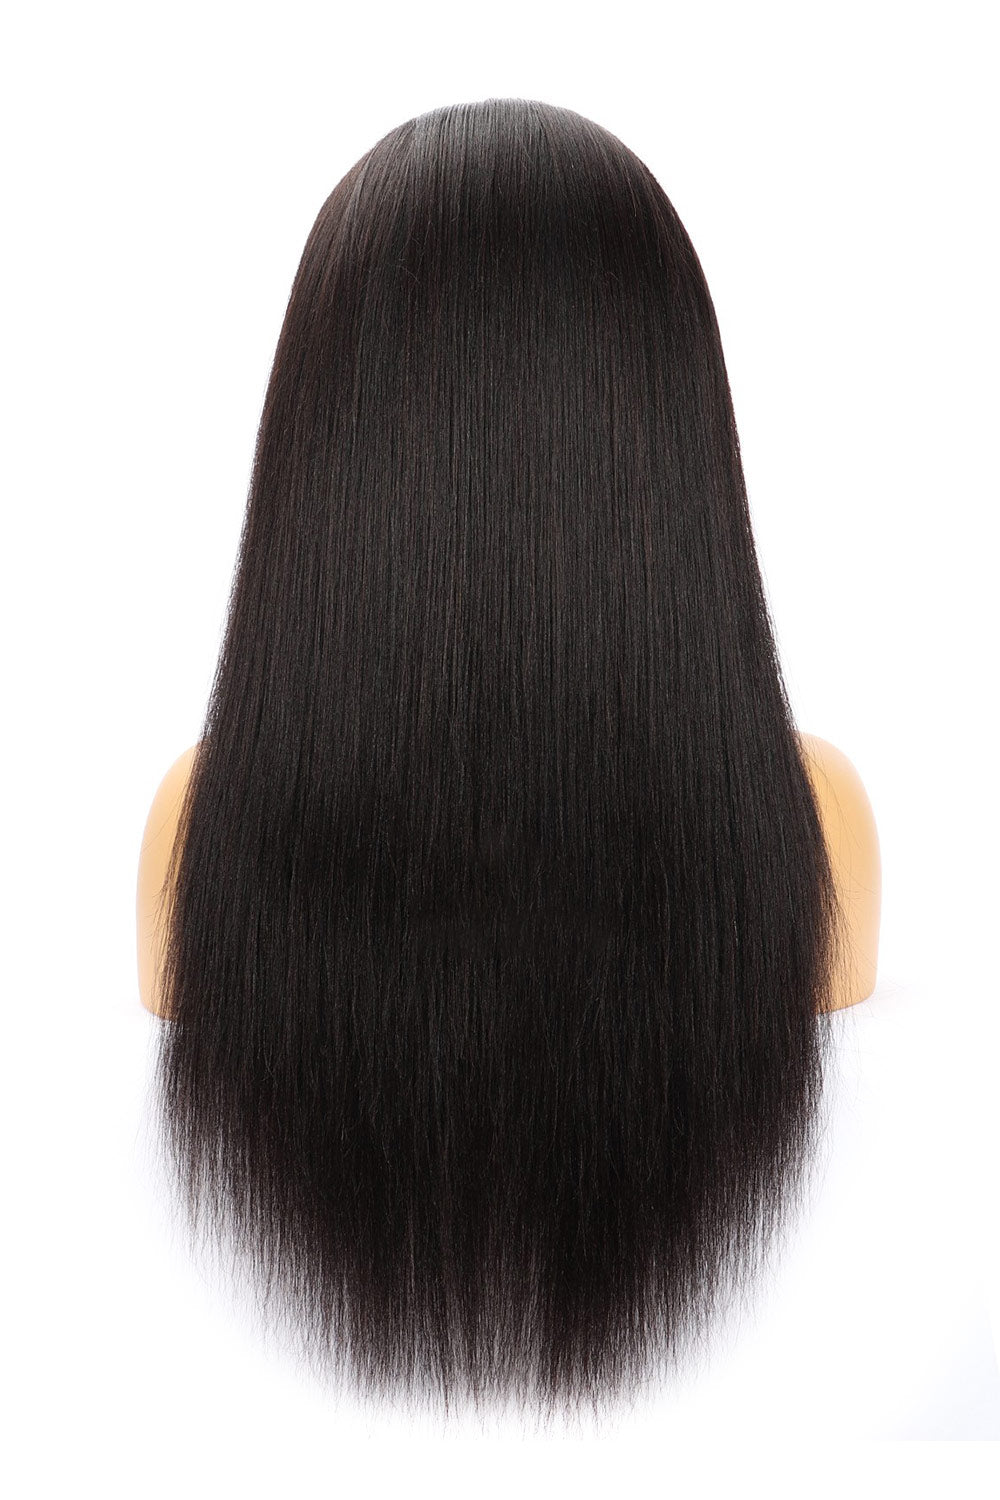 Estilos de peluca con diadema recta, peluca de cabello 100% humano HBW01